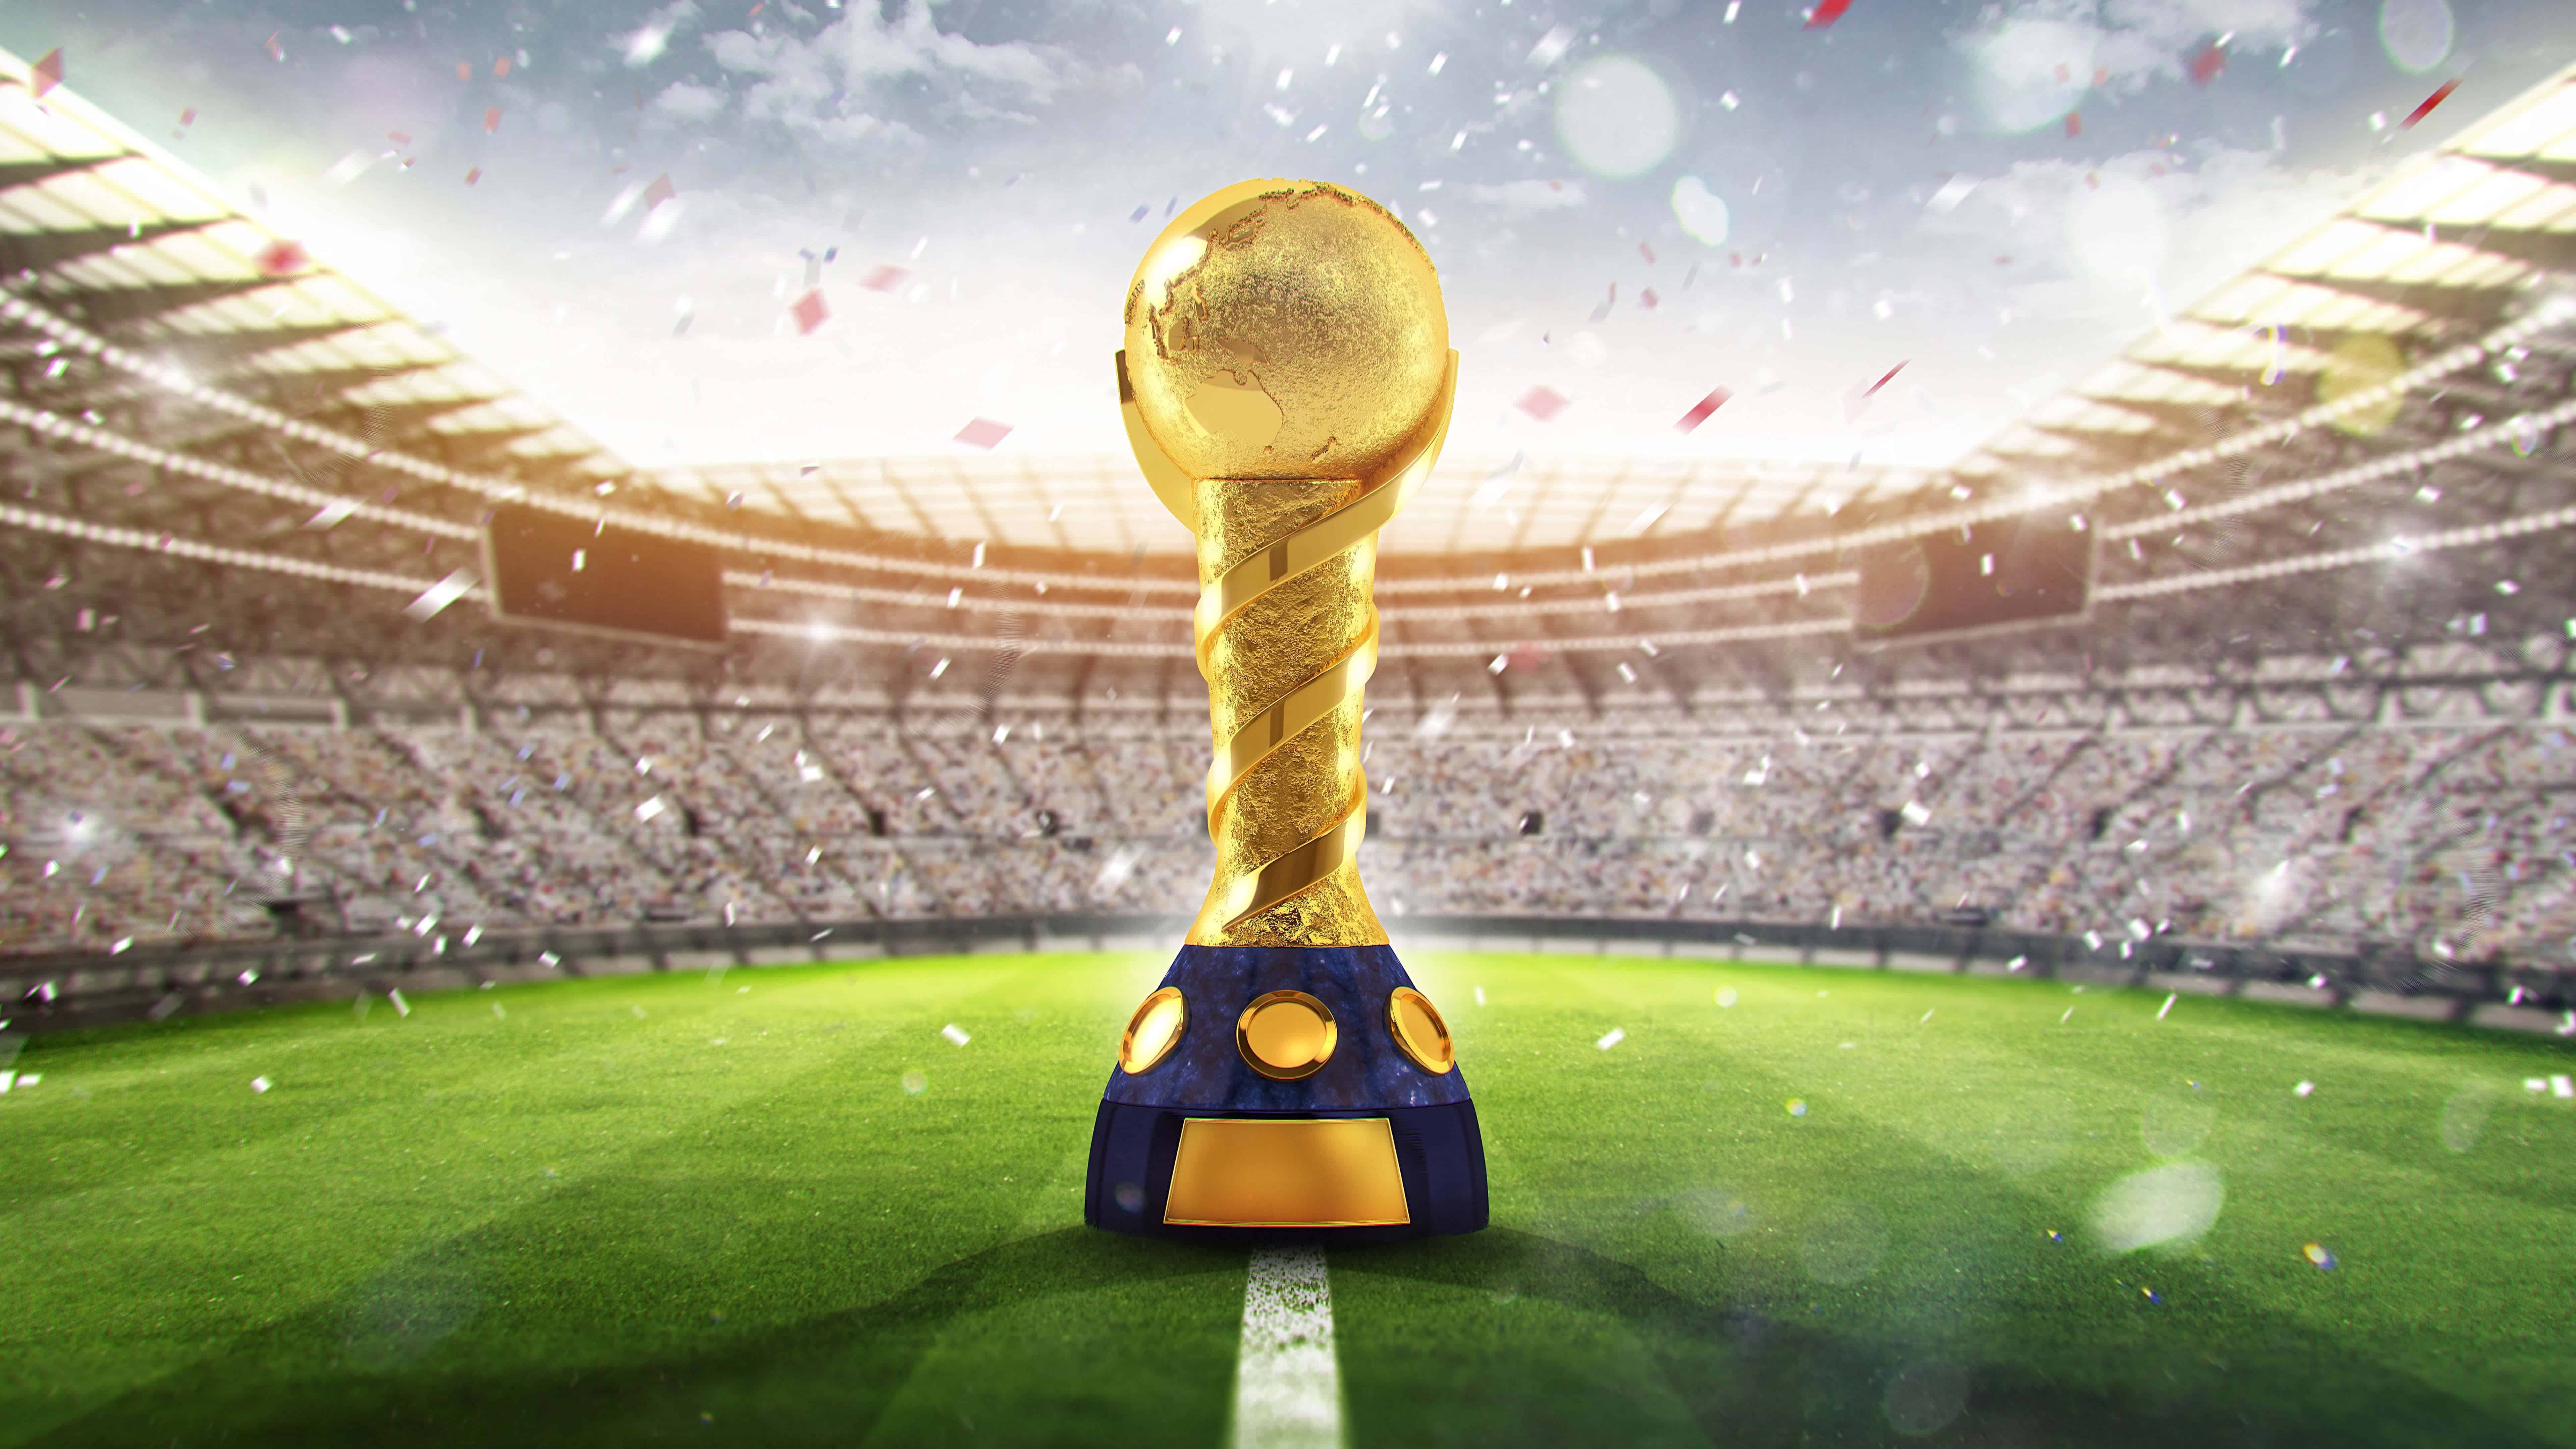 Fifa World Cup 2018 Russia Golden Trophy UHD 8K Wallpaper | Pixelz